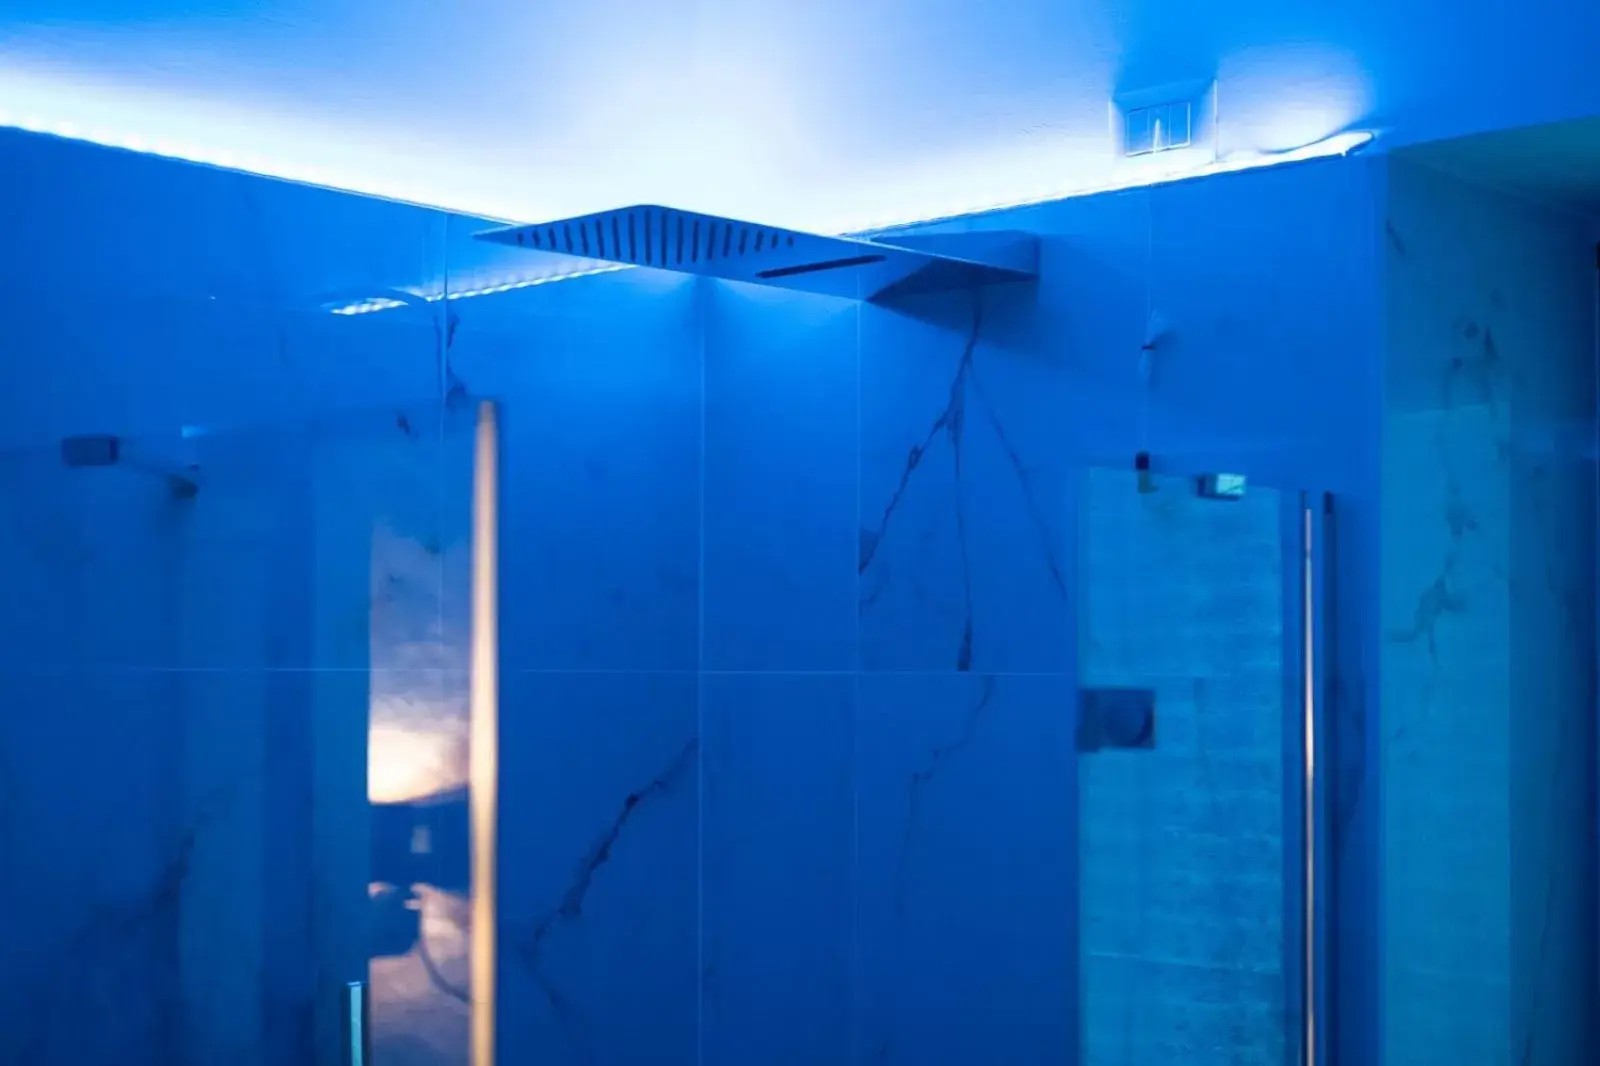 Shower, Bathroom in La Dimora del Principe